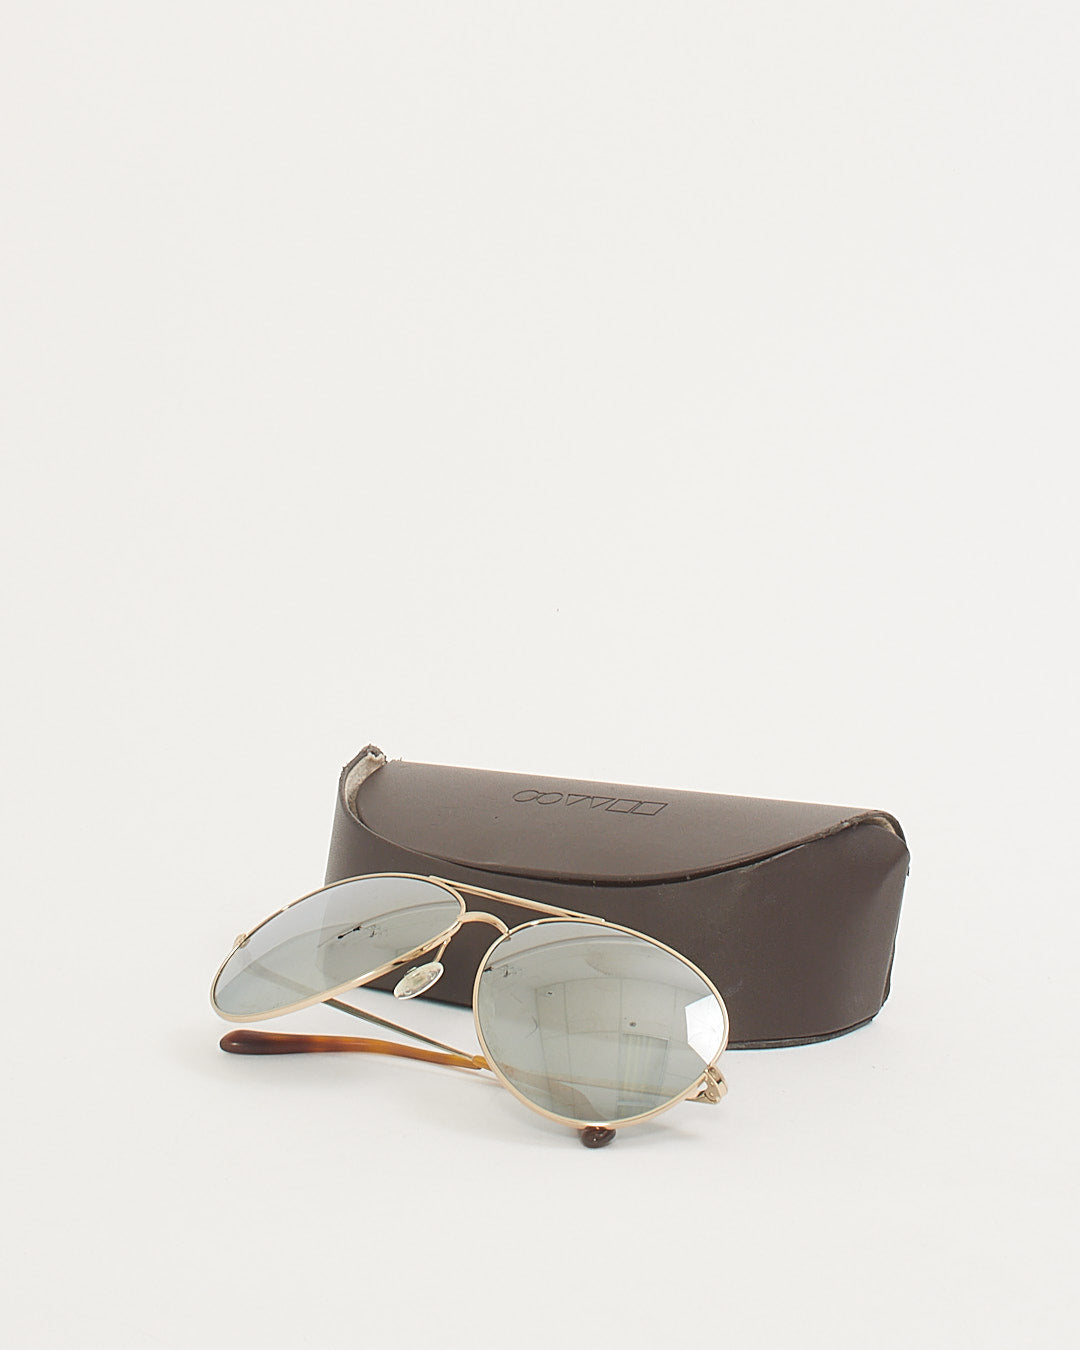 Oliver Peoples Gold Frame / Silver Lens Sayer Aviator Sunglasses